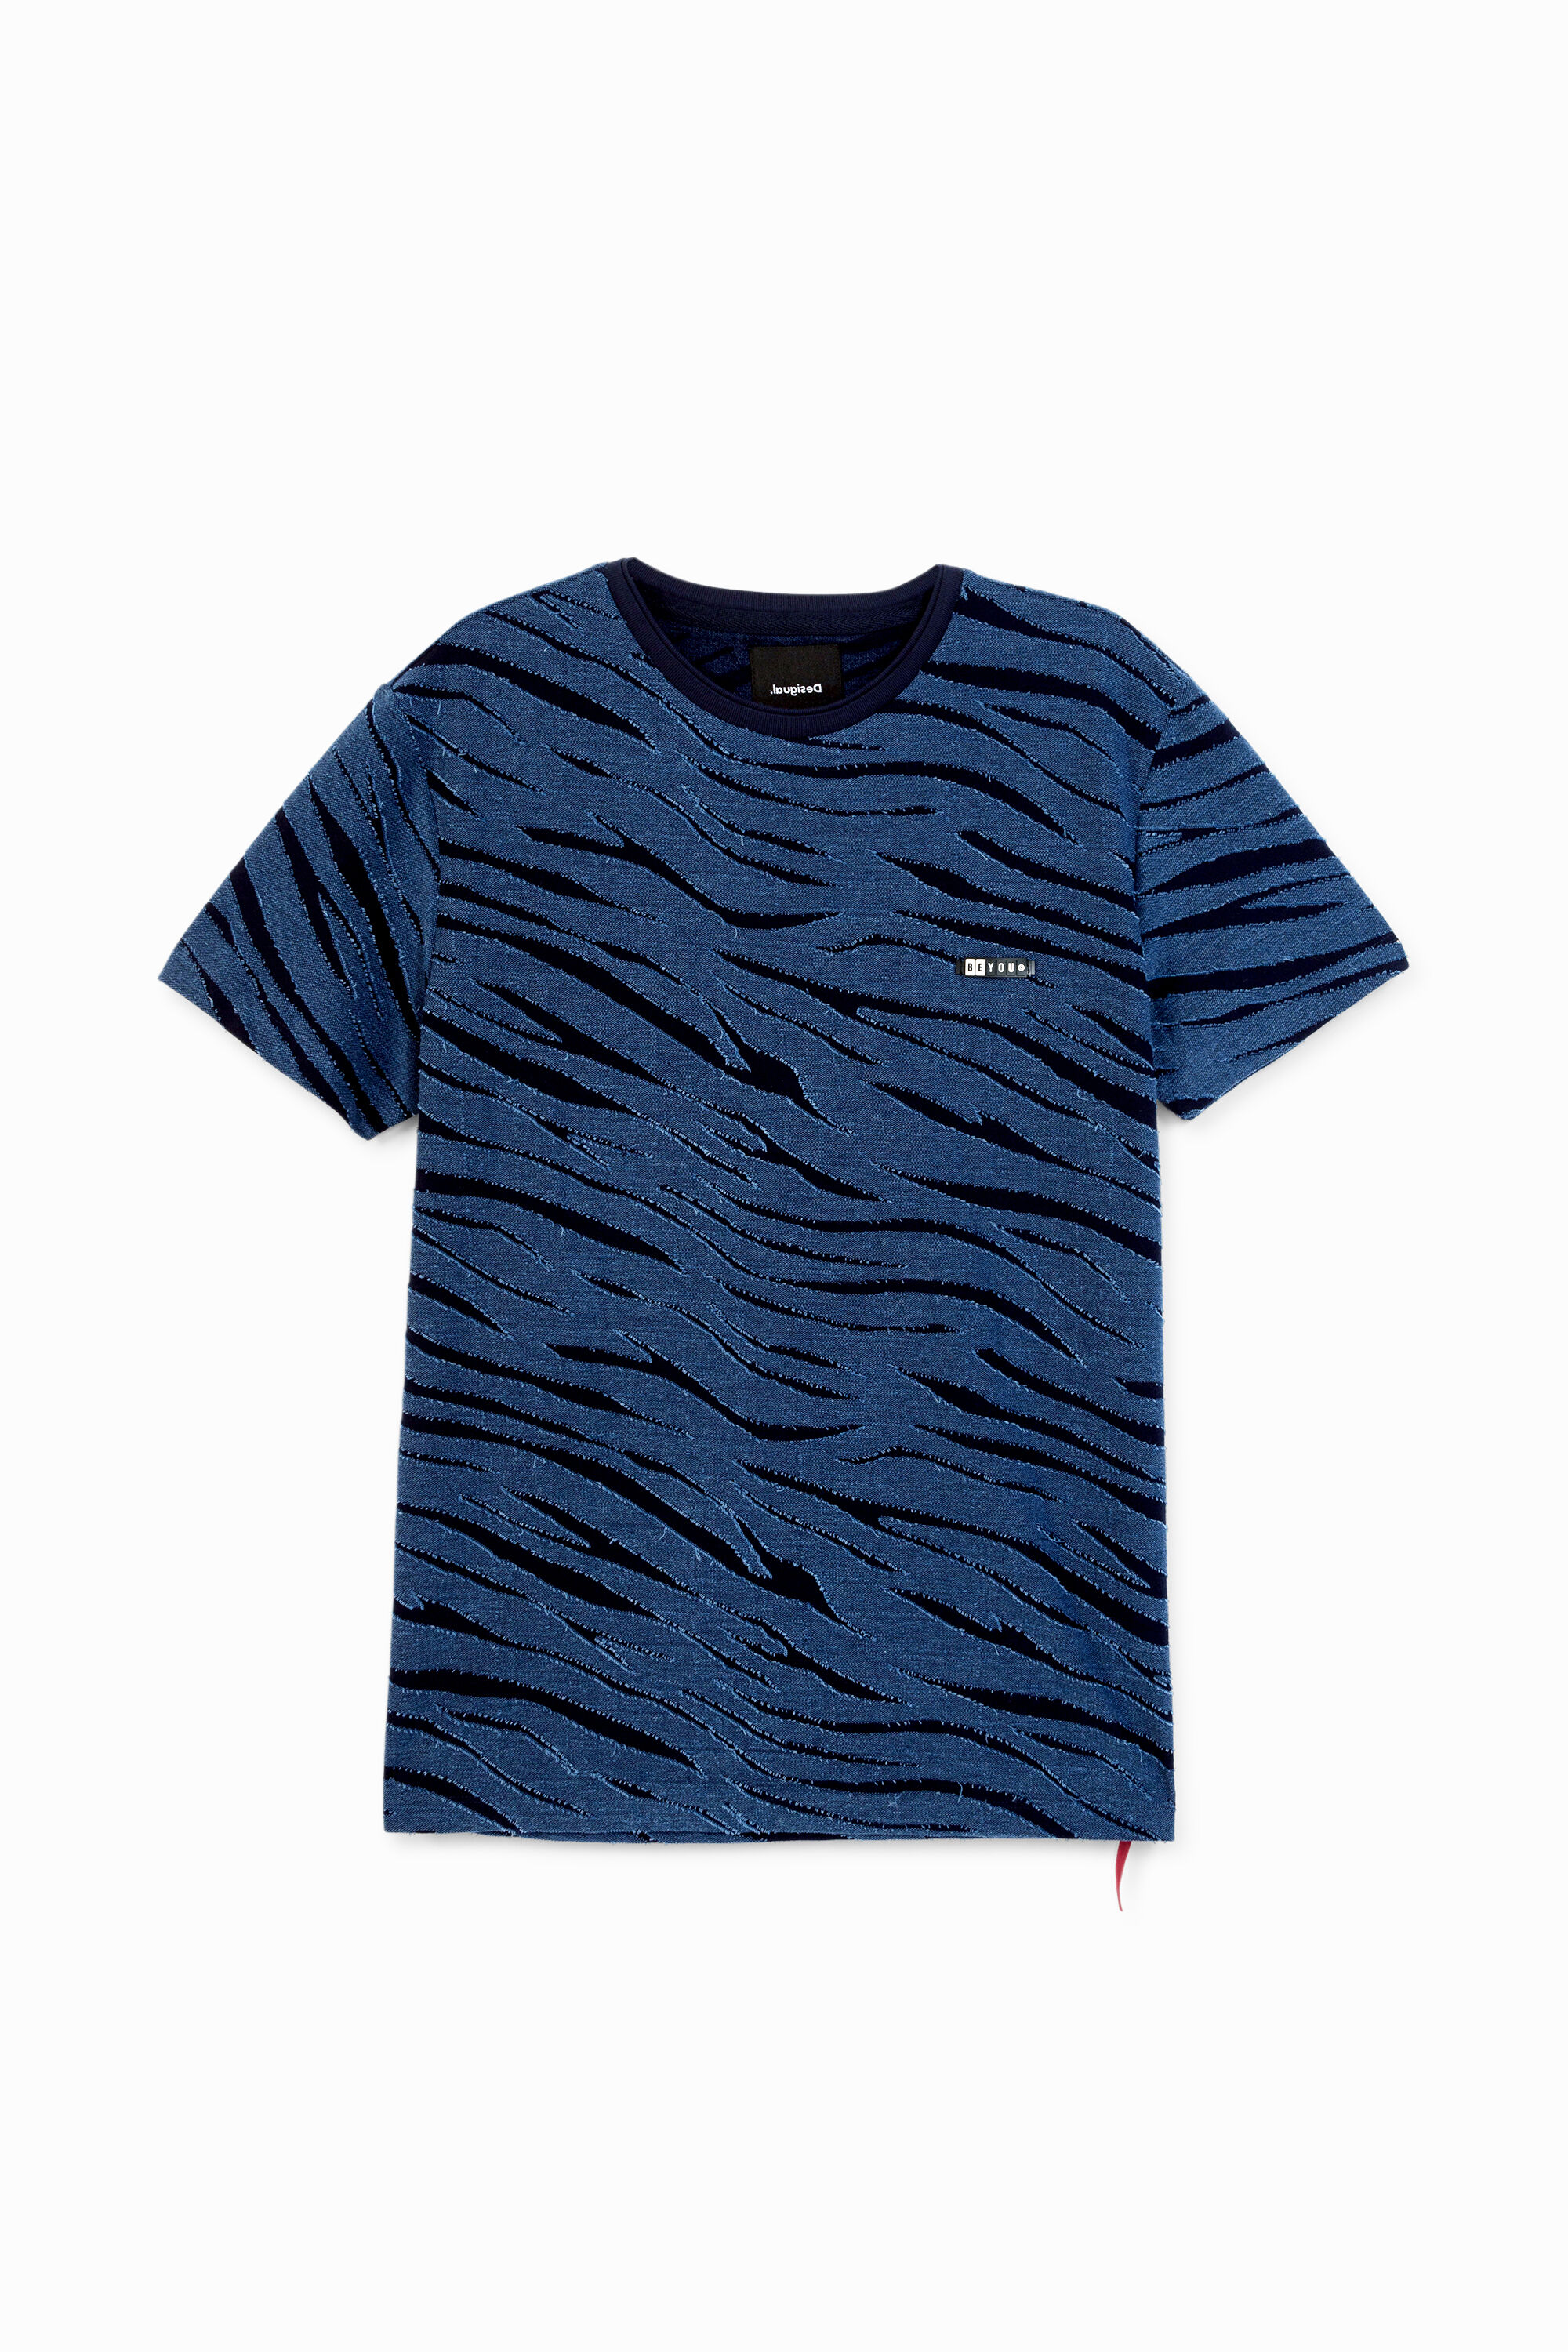 Blue animal print T-shirt - BLUE - S